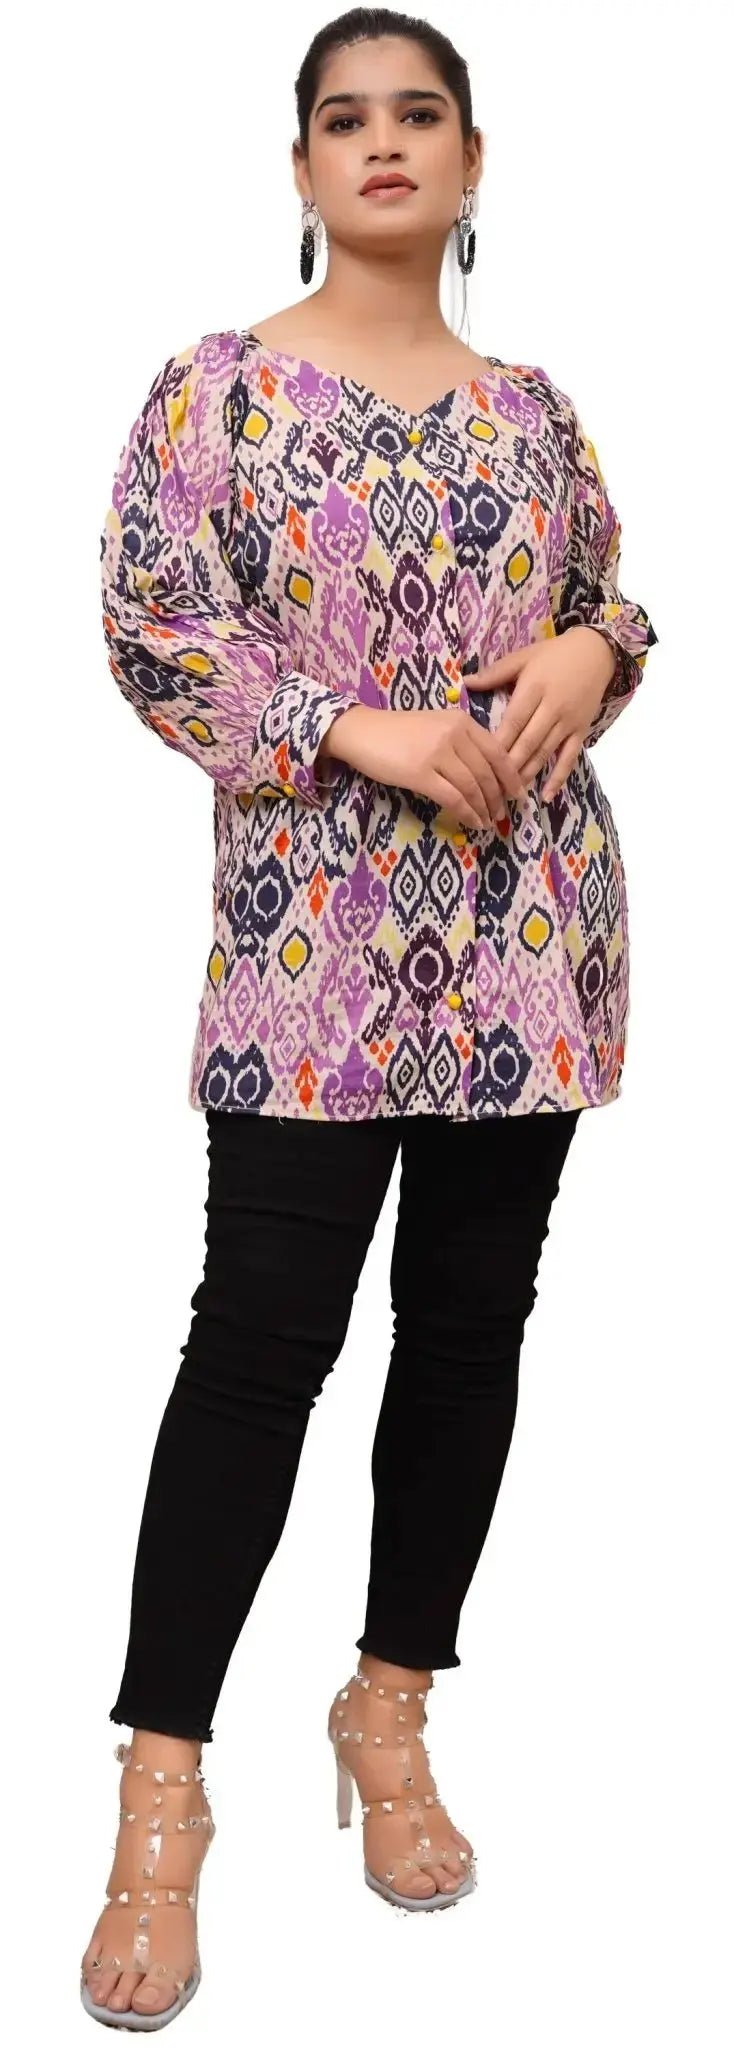 IshDeena Indian Kurtis for Women Stylish Long Shirt 100 Cotton Casual Festive M 3XL Indian Tunic Tops for Ladies 3X LargeDenimOffWhite A23S1 IshDeena 1684039516